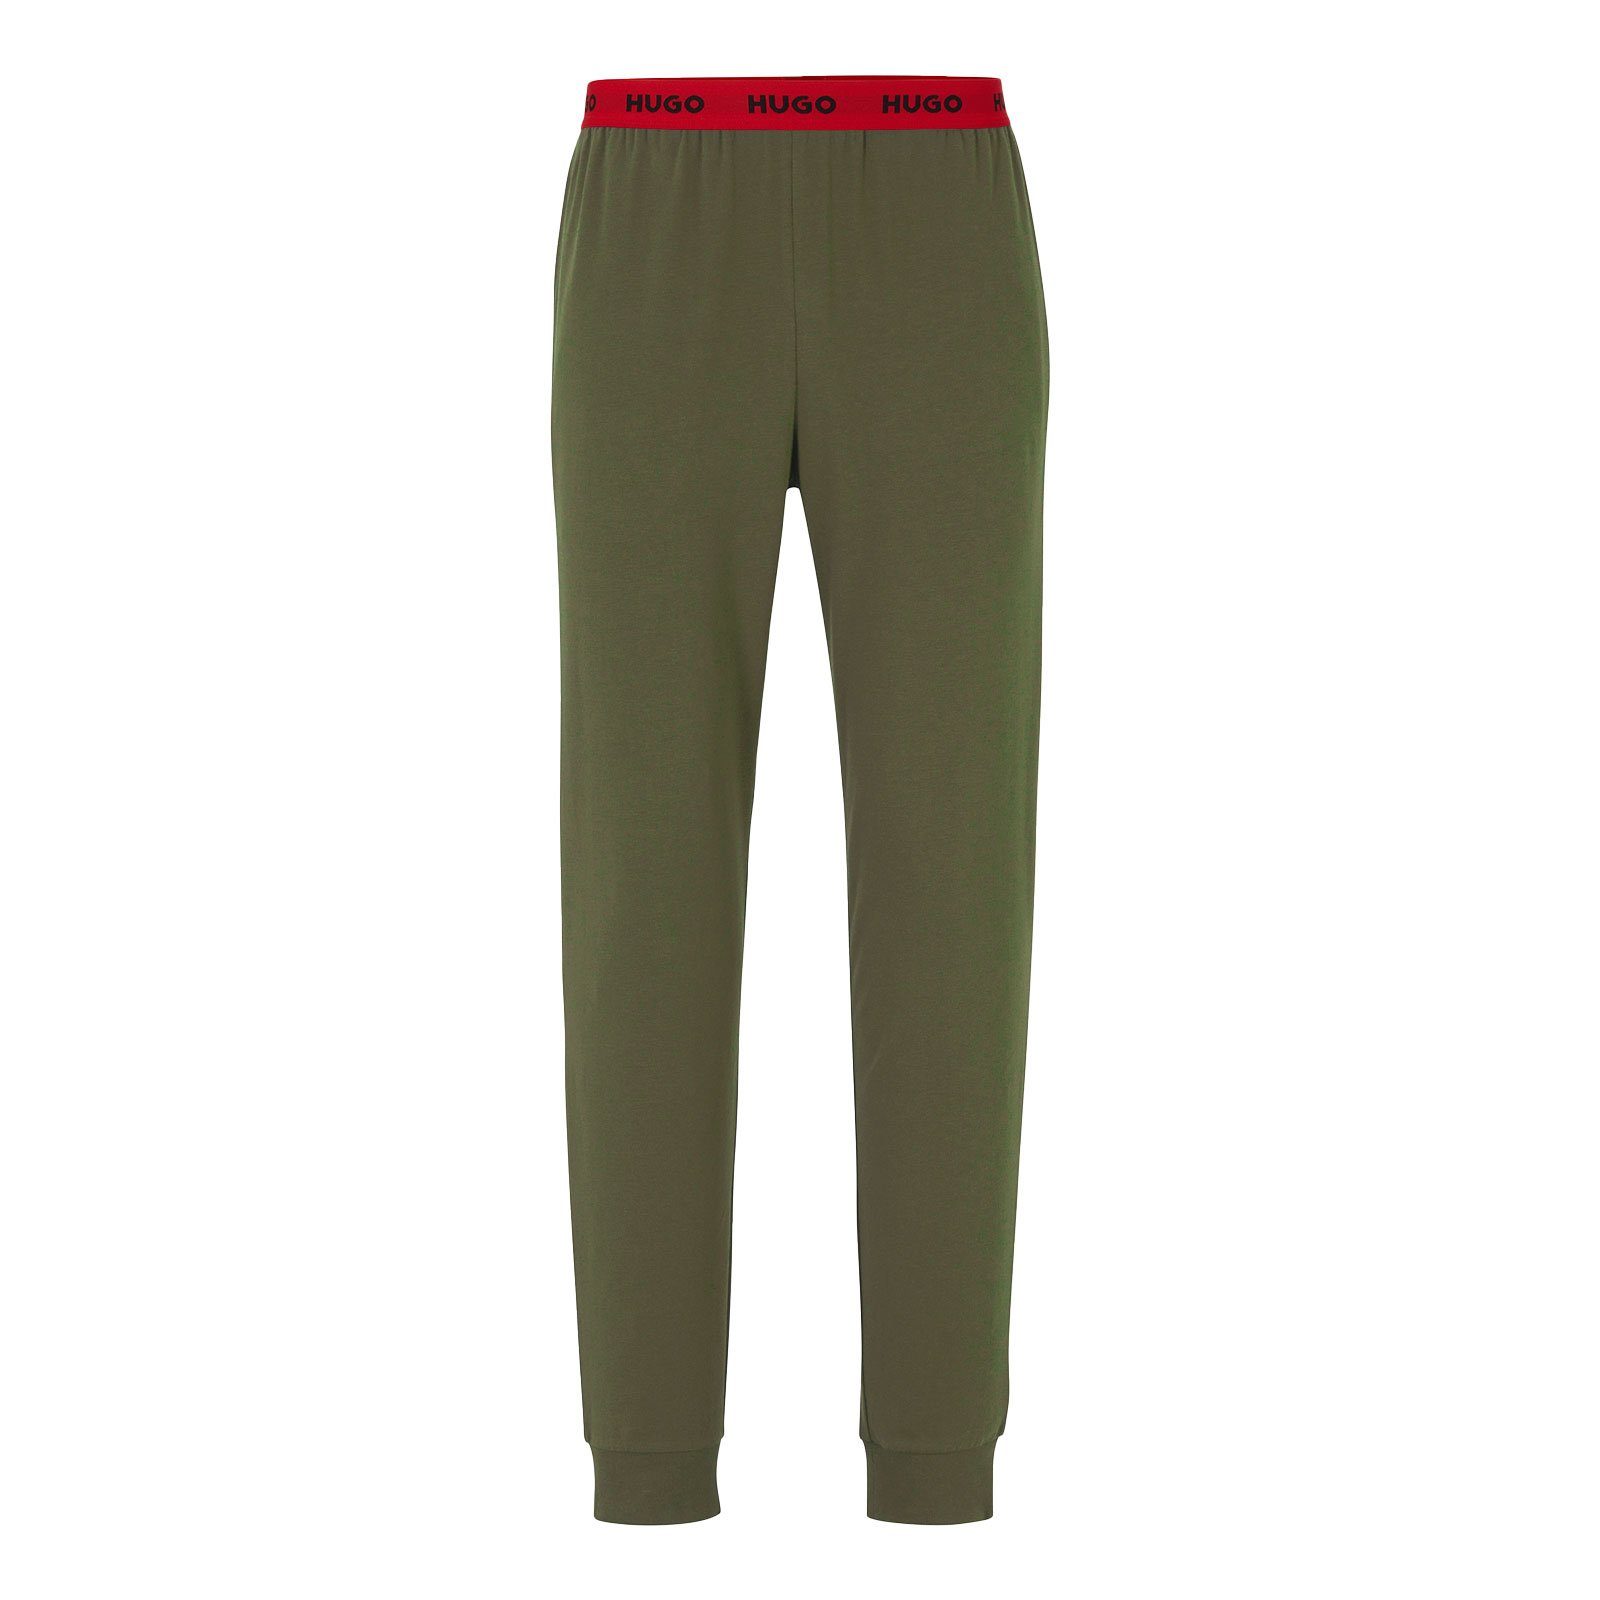 HUGO Pyjamahose Pants sichtbarem Elastikbund open Linked green mit 345